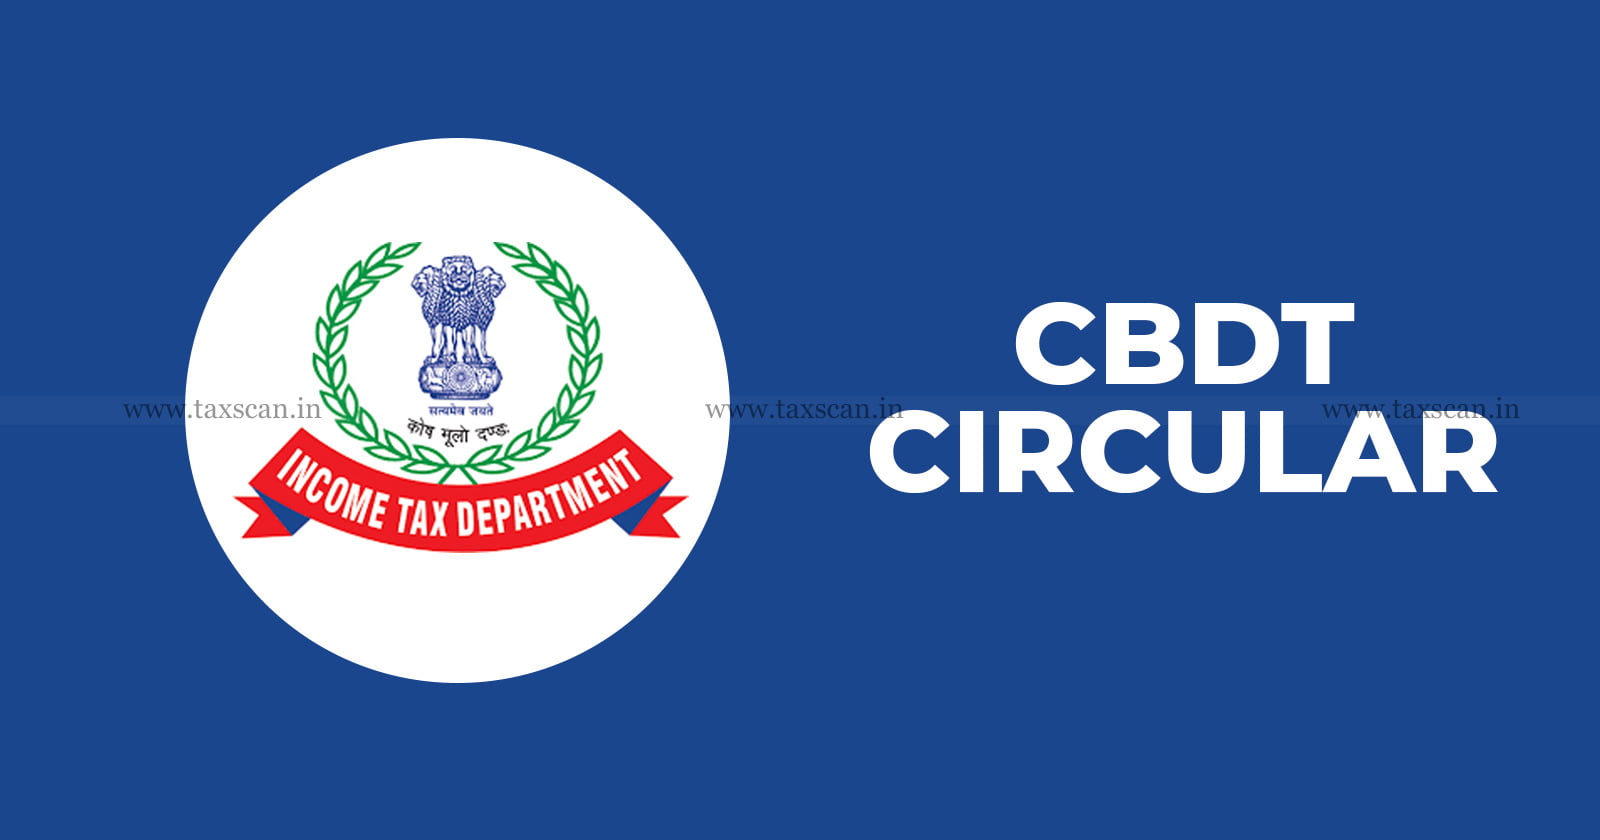 ITAT Hyderabad - Income Tax - CBDT circular - CBDT - taxscan